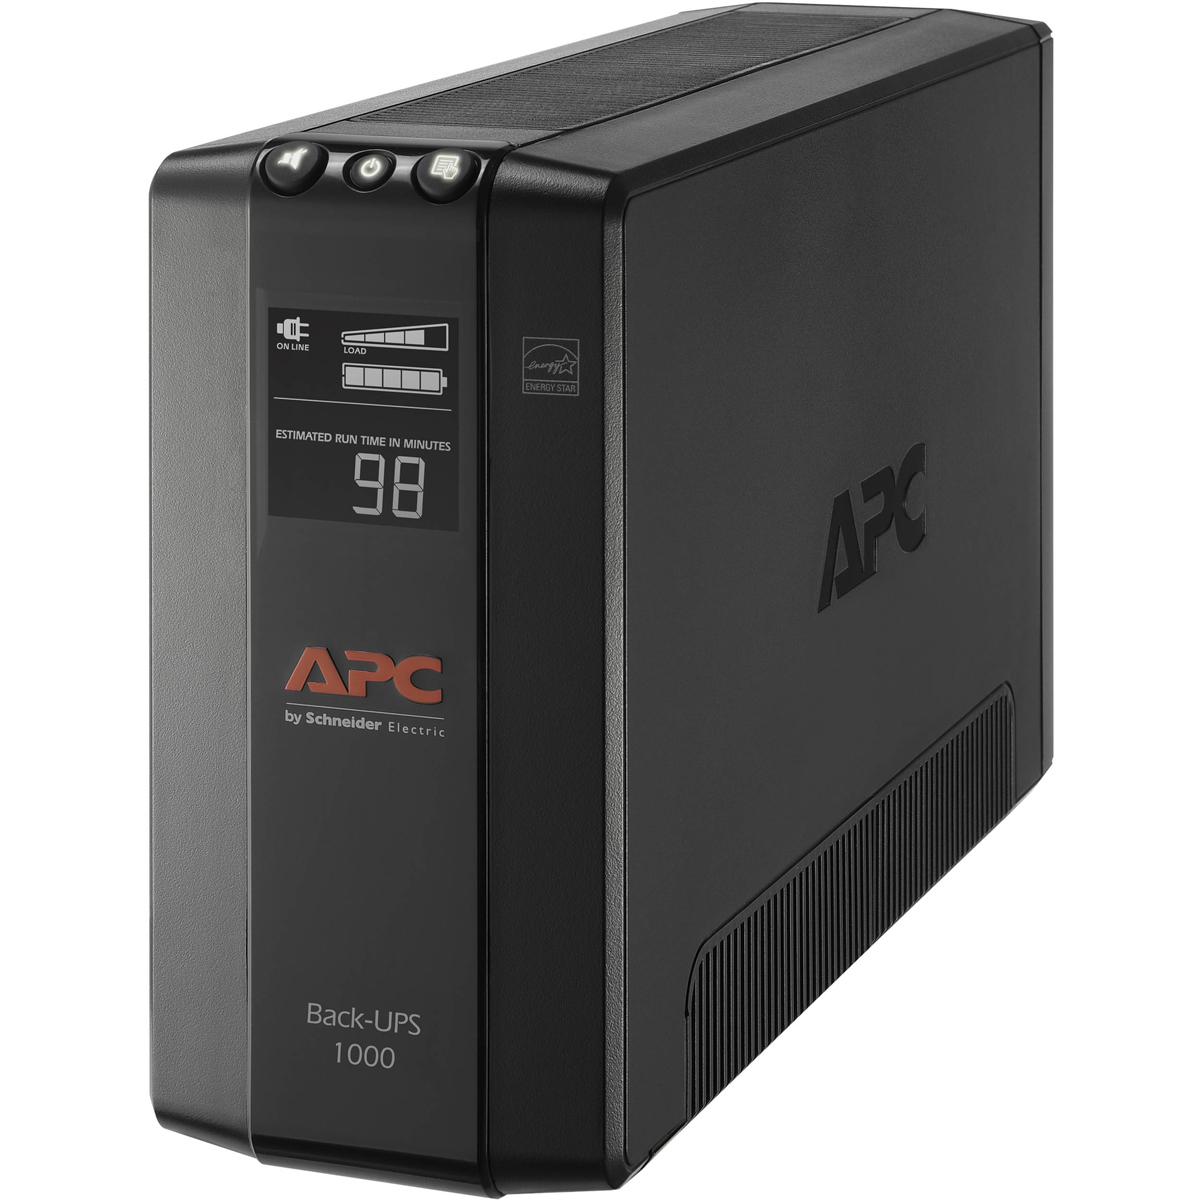 APC Back-UPS Pro 1000 VA UPS 8-Outlets for $89.99 Shipped